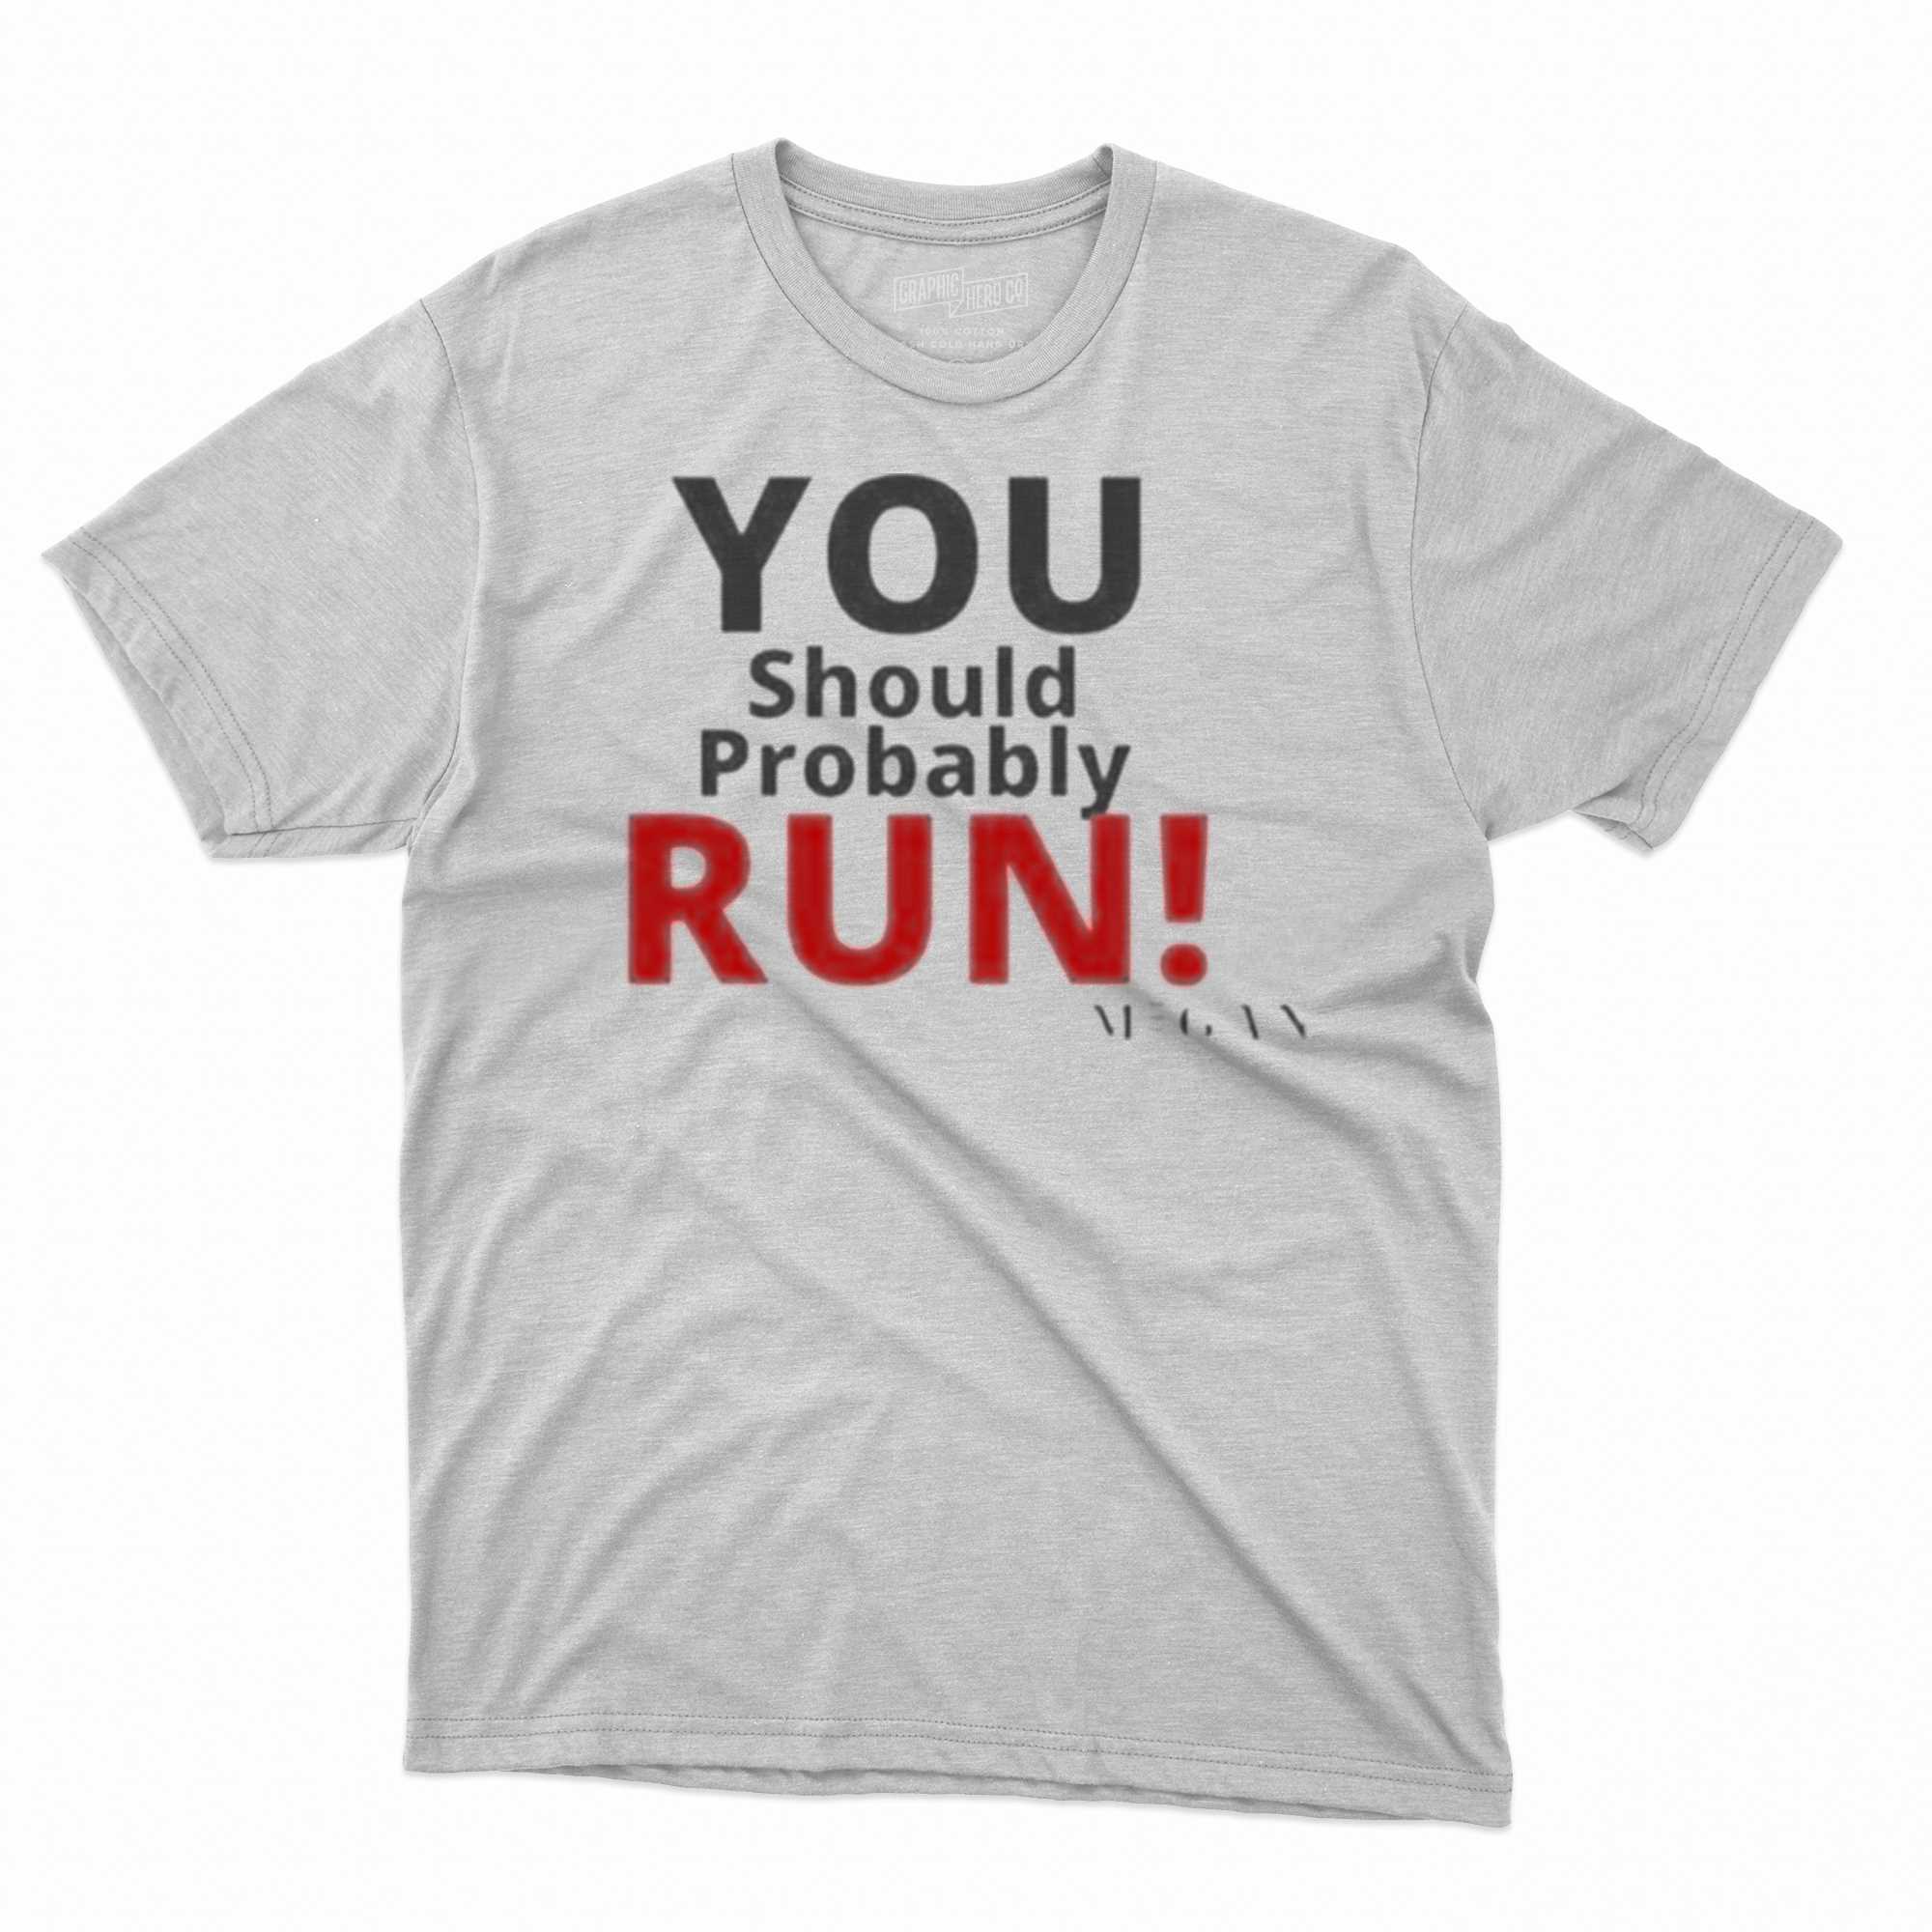 You Should Probably Run M3gan Quote Design T Shirt 1